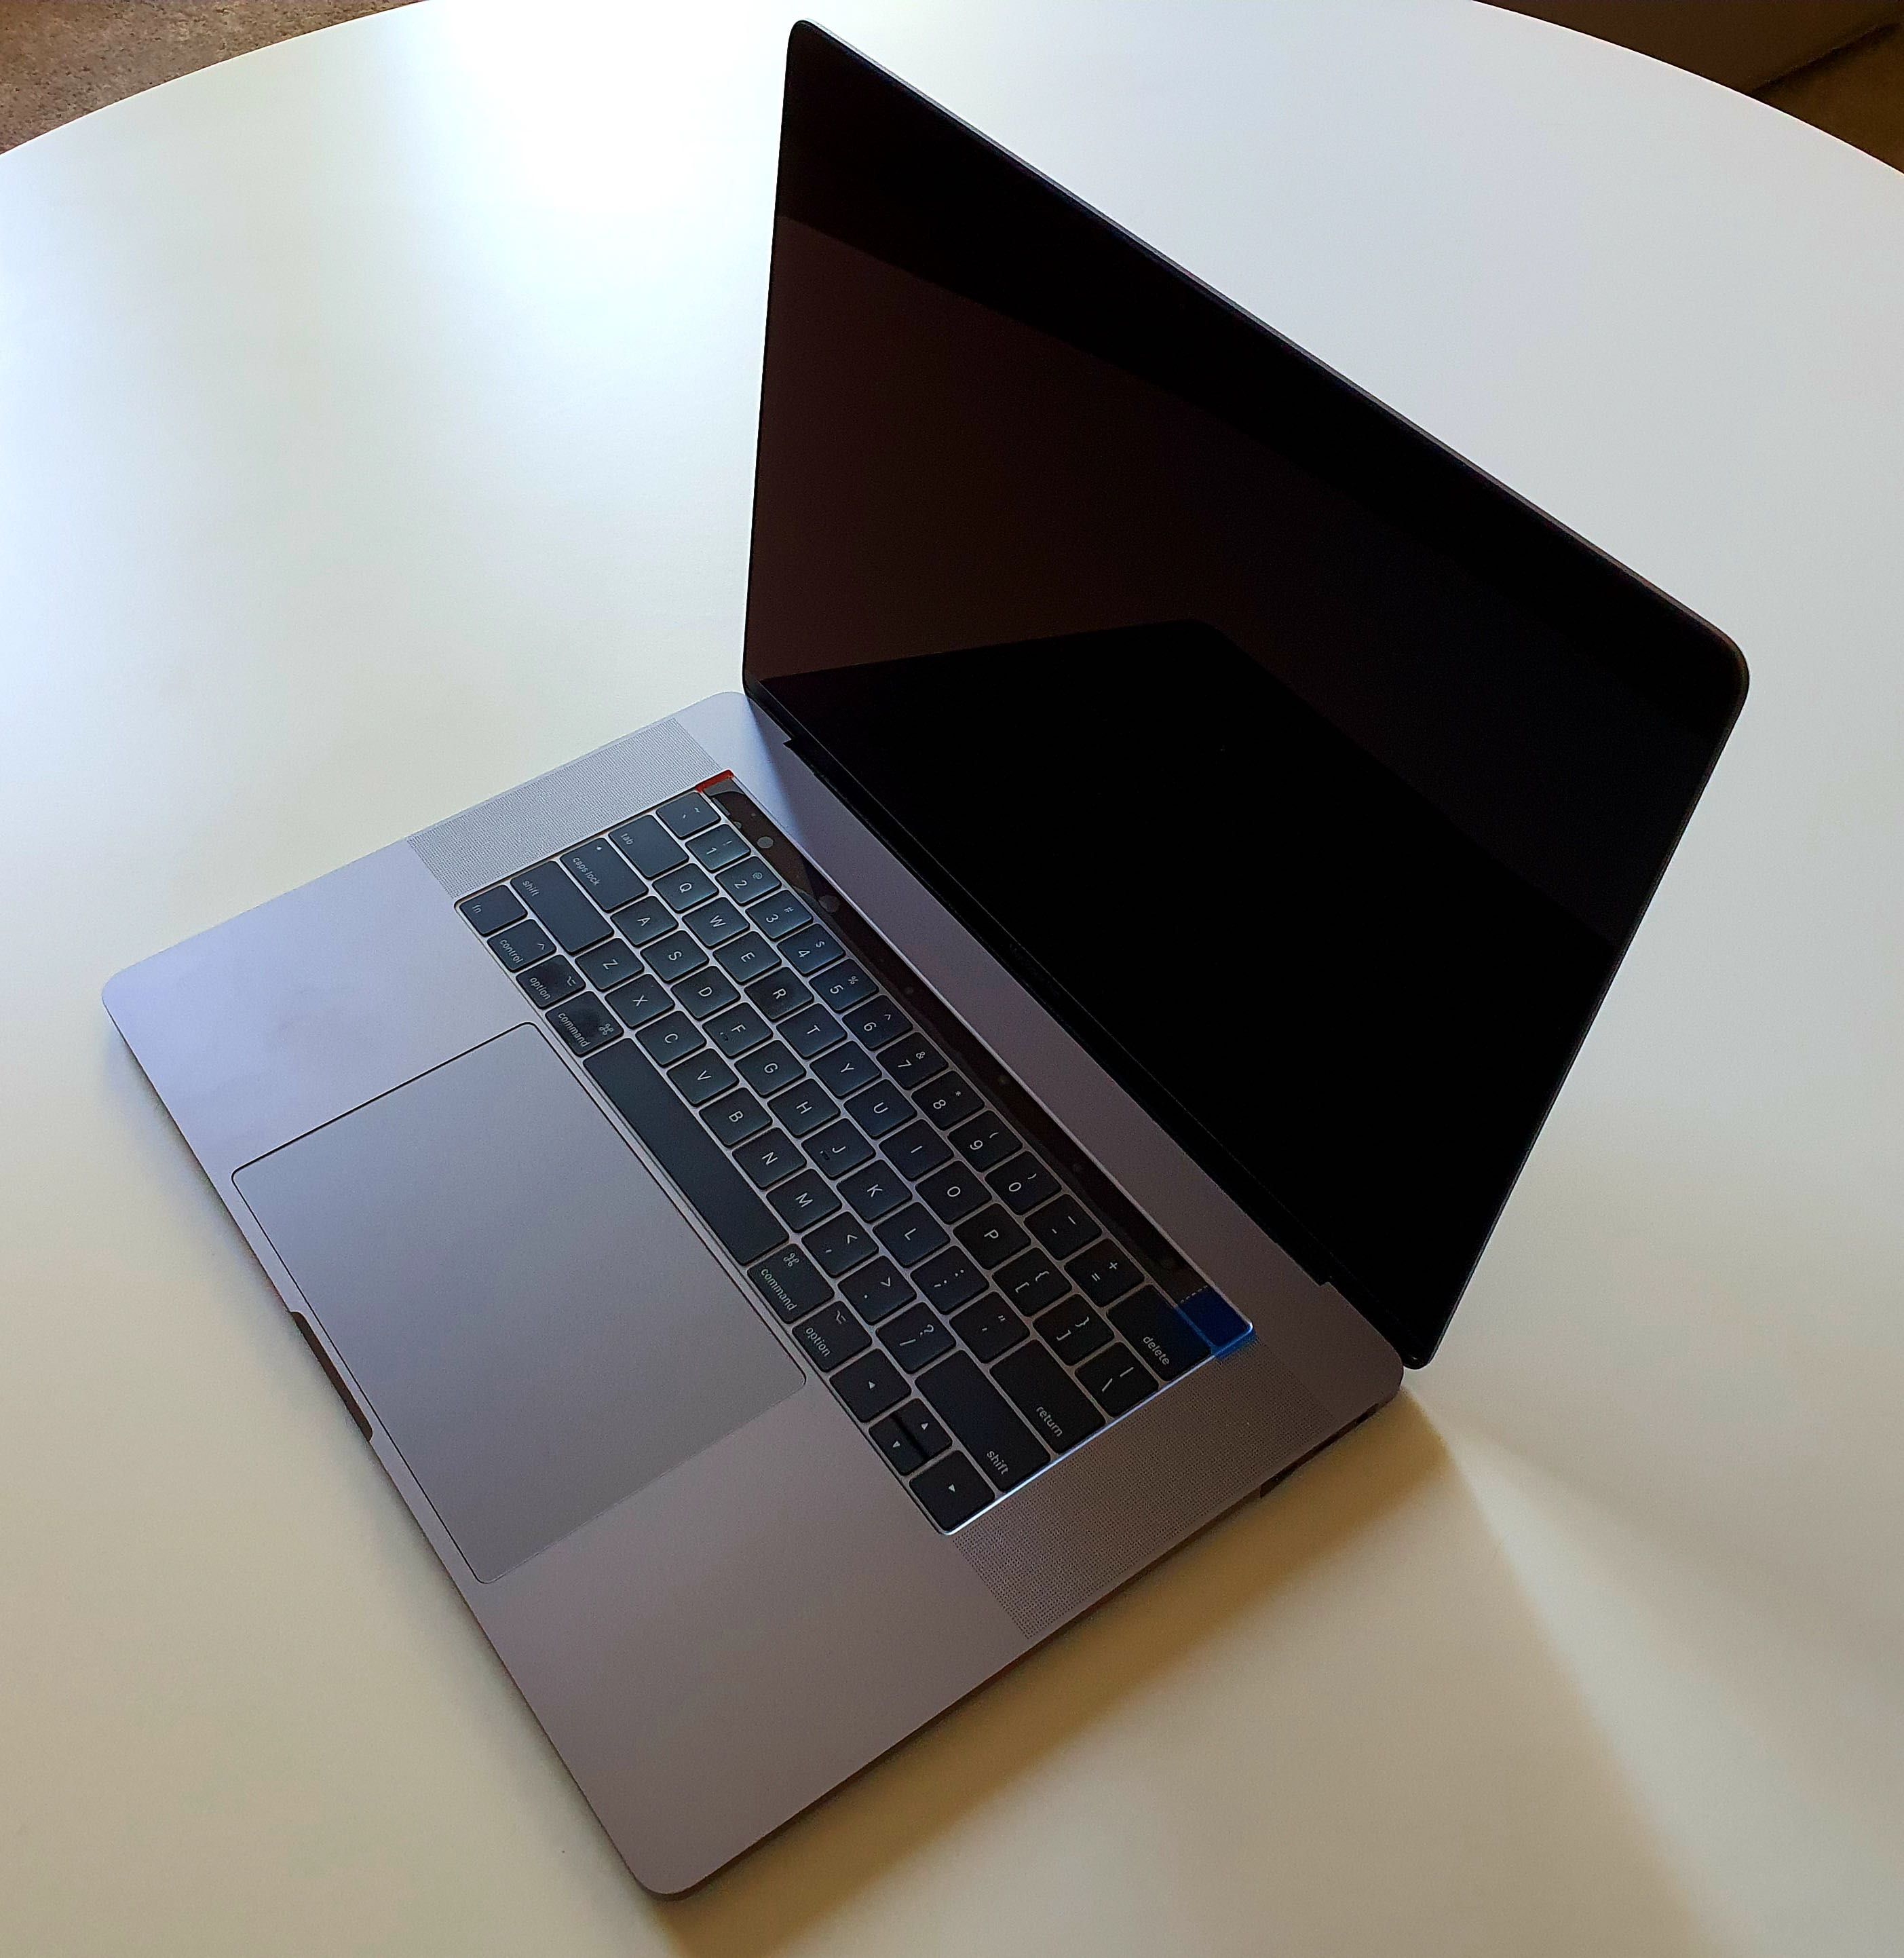 MacBook Pro 15" - bateria e teclado rigorosamente novos!